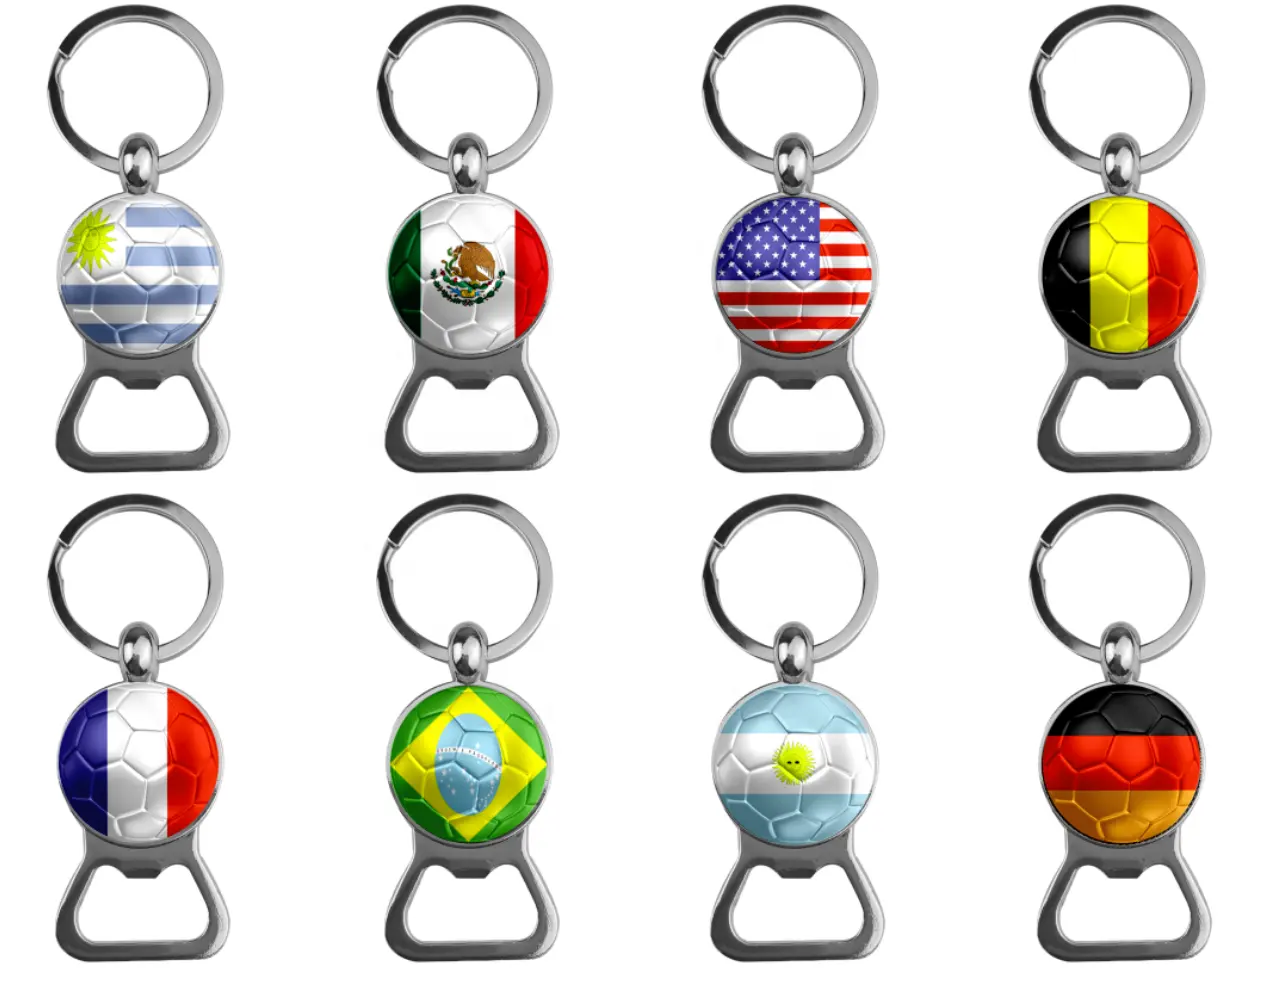 Llavero لكرة القدم الترويجية مخصص هدية سلاسل حلقة فتاحة الزجاجات المعادن سلسلة مفاتيح مع العلم